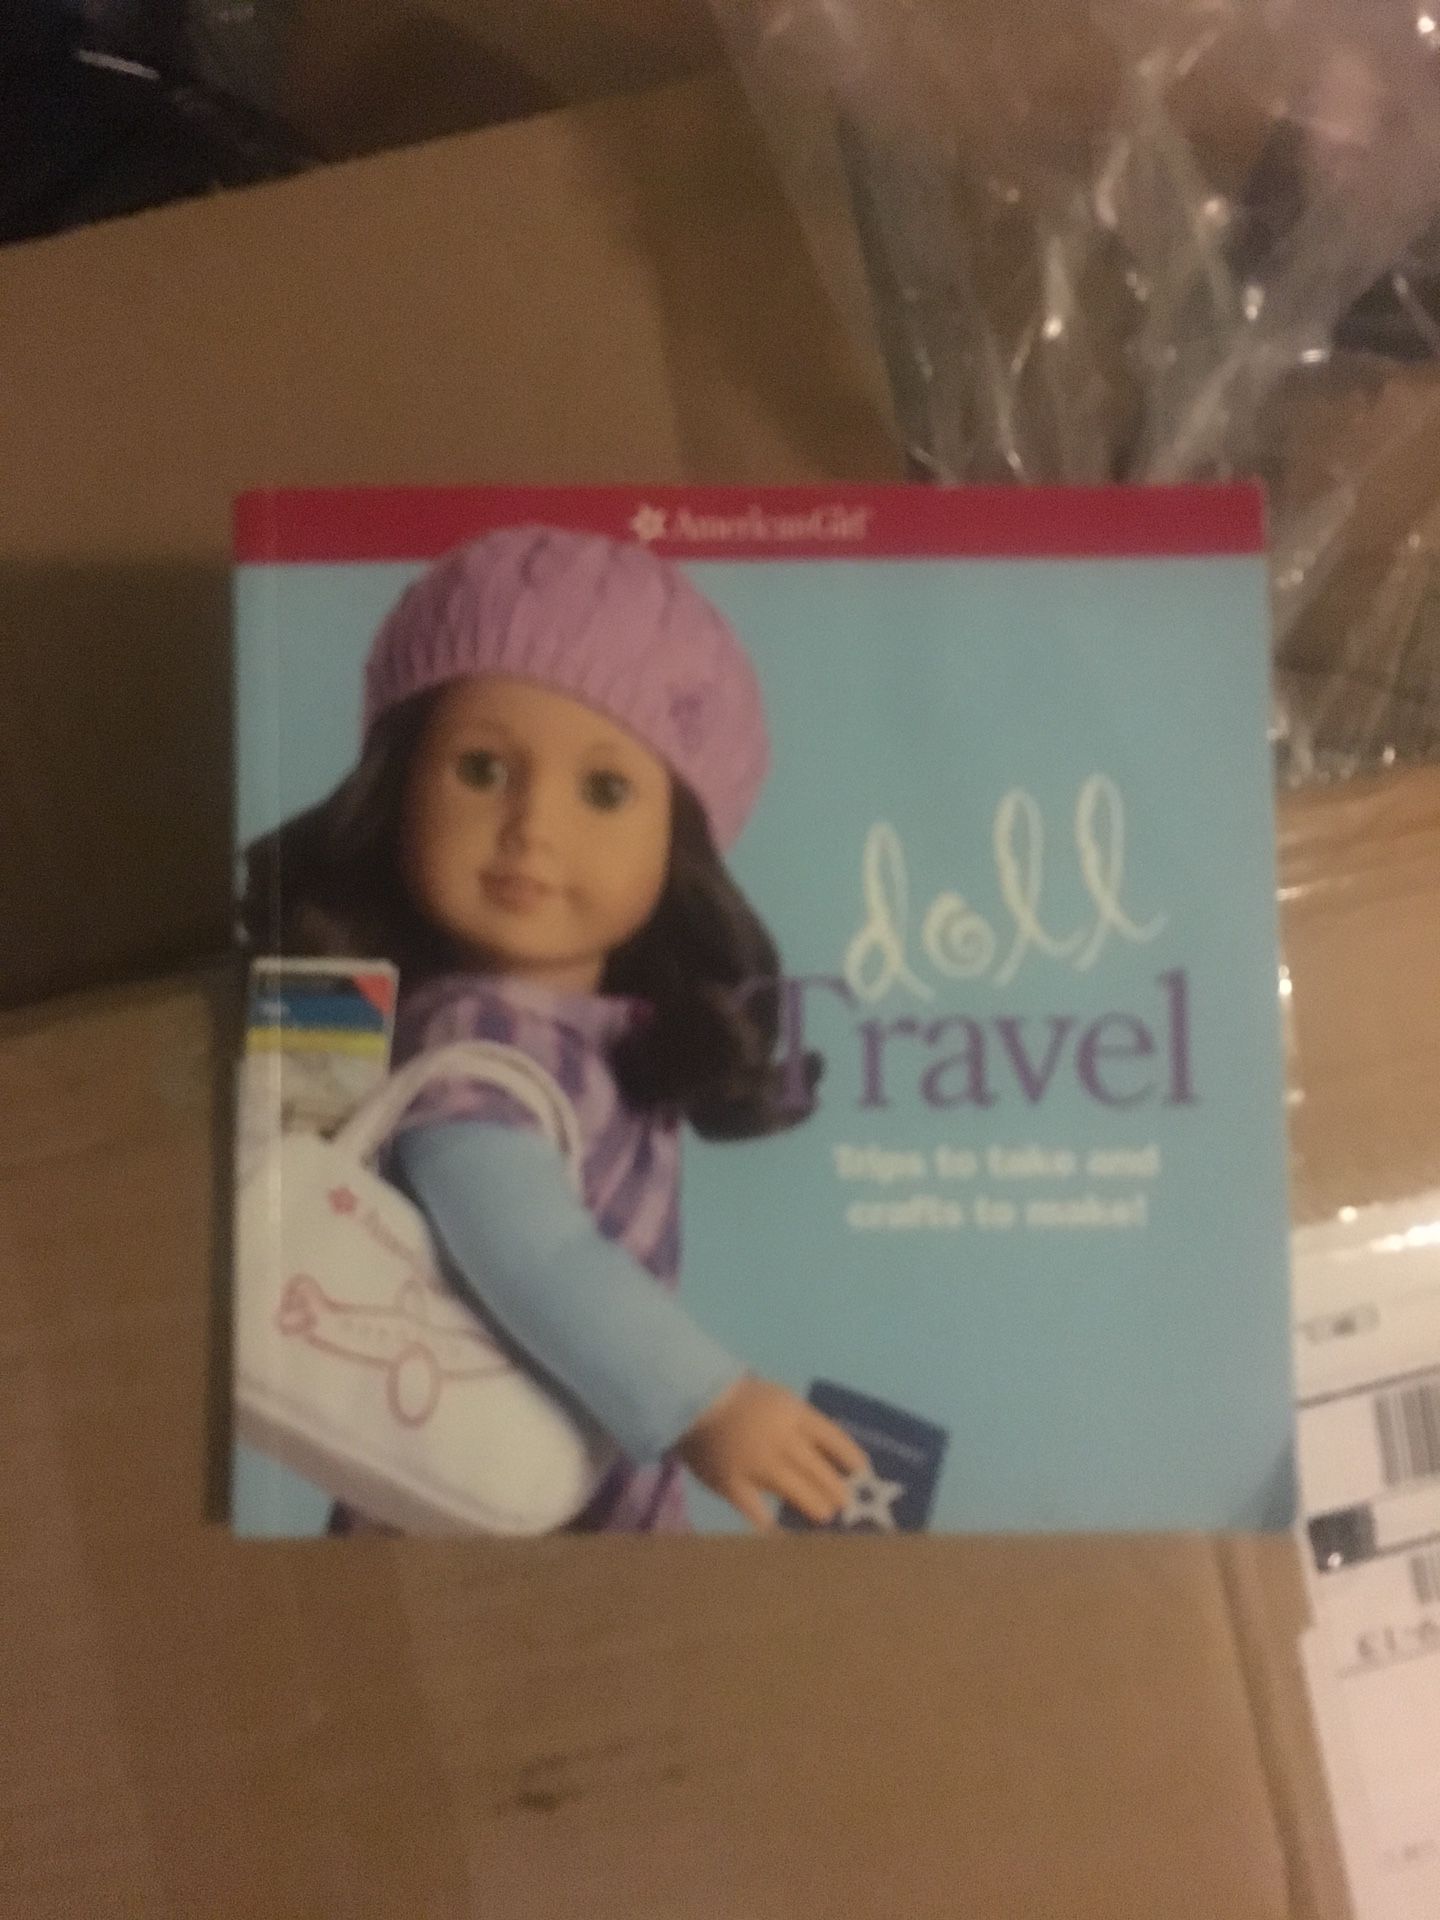 American Girl “ Doll travel “